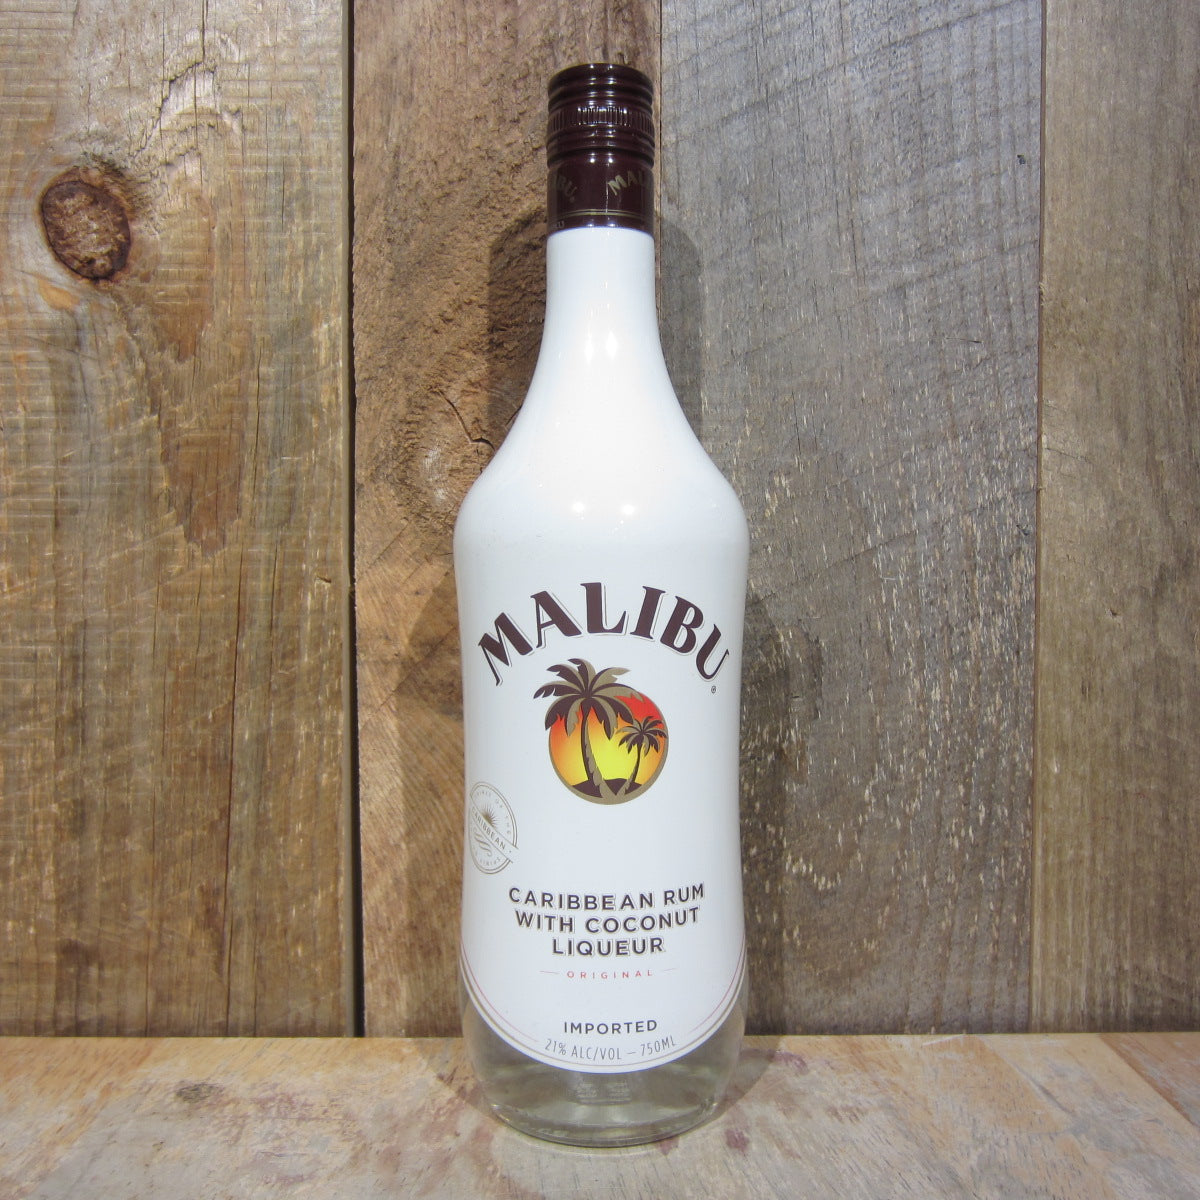 Malibu Caribbean Rum with Coconut Flavour, 750 ml